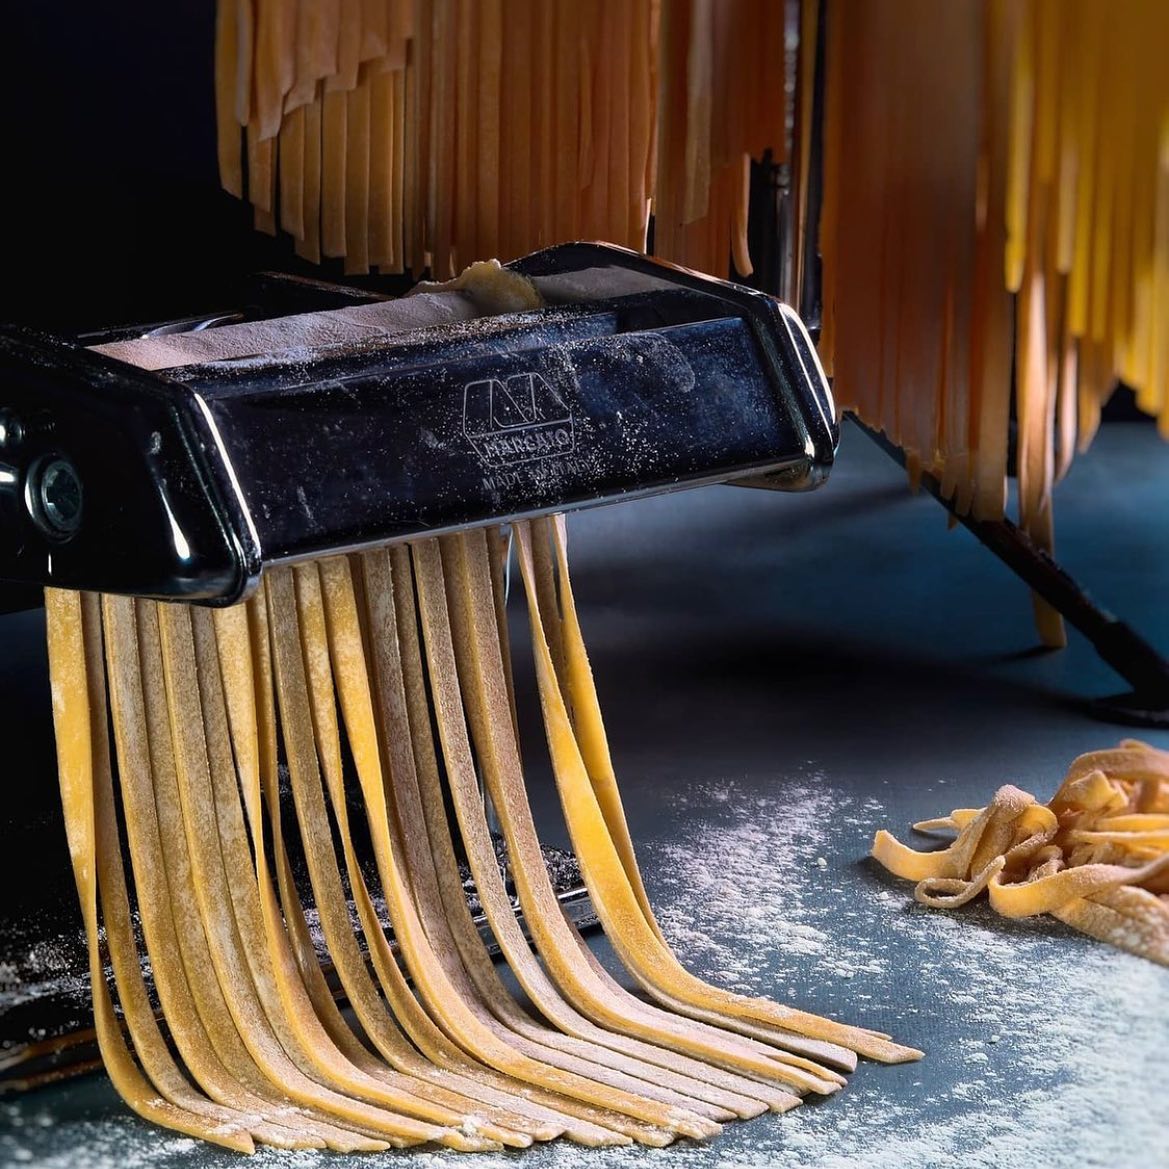 Marcato Atlas 150 Pasta Machine Ravioli Attachment - Bear Claw Knife & Shear